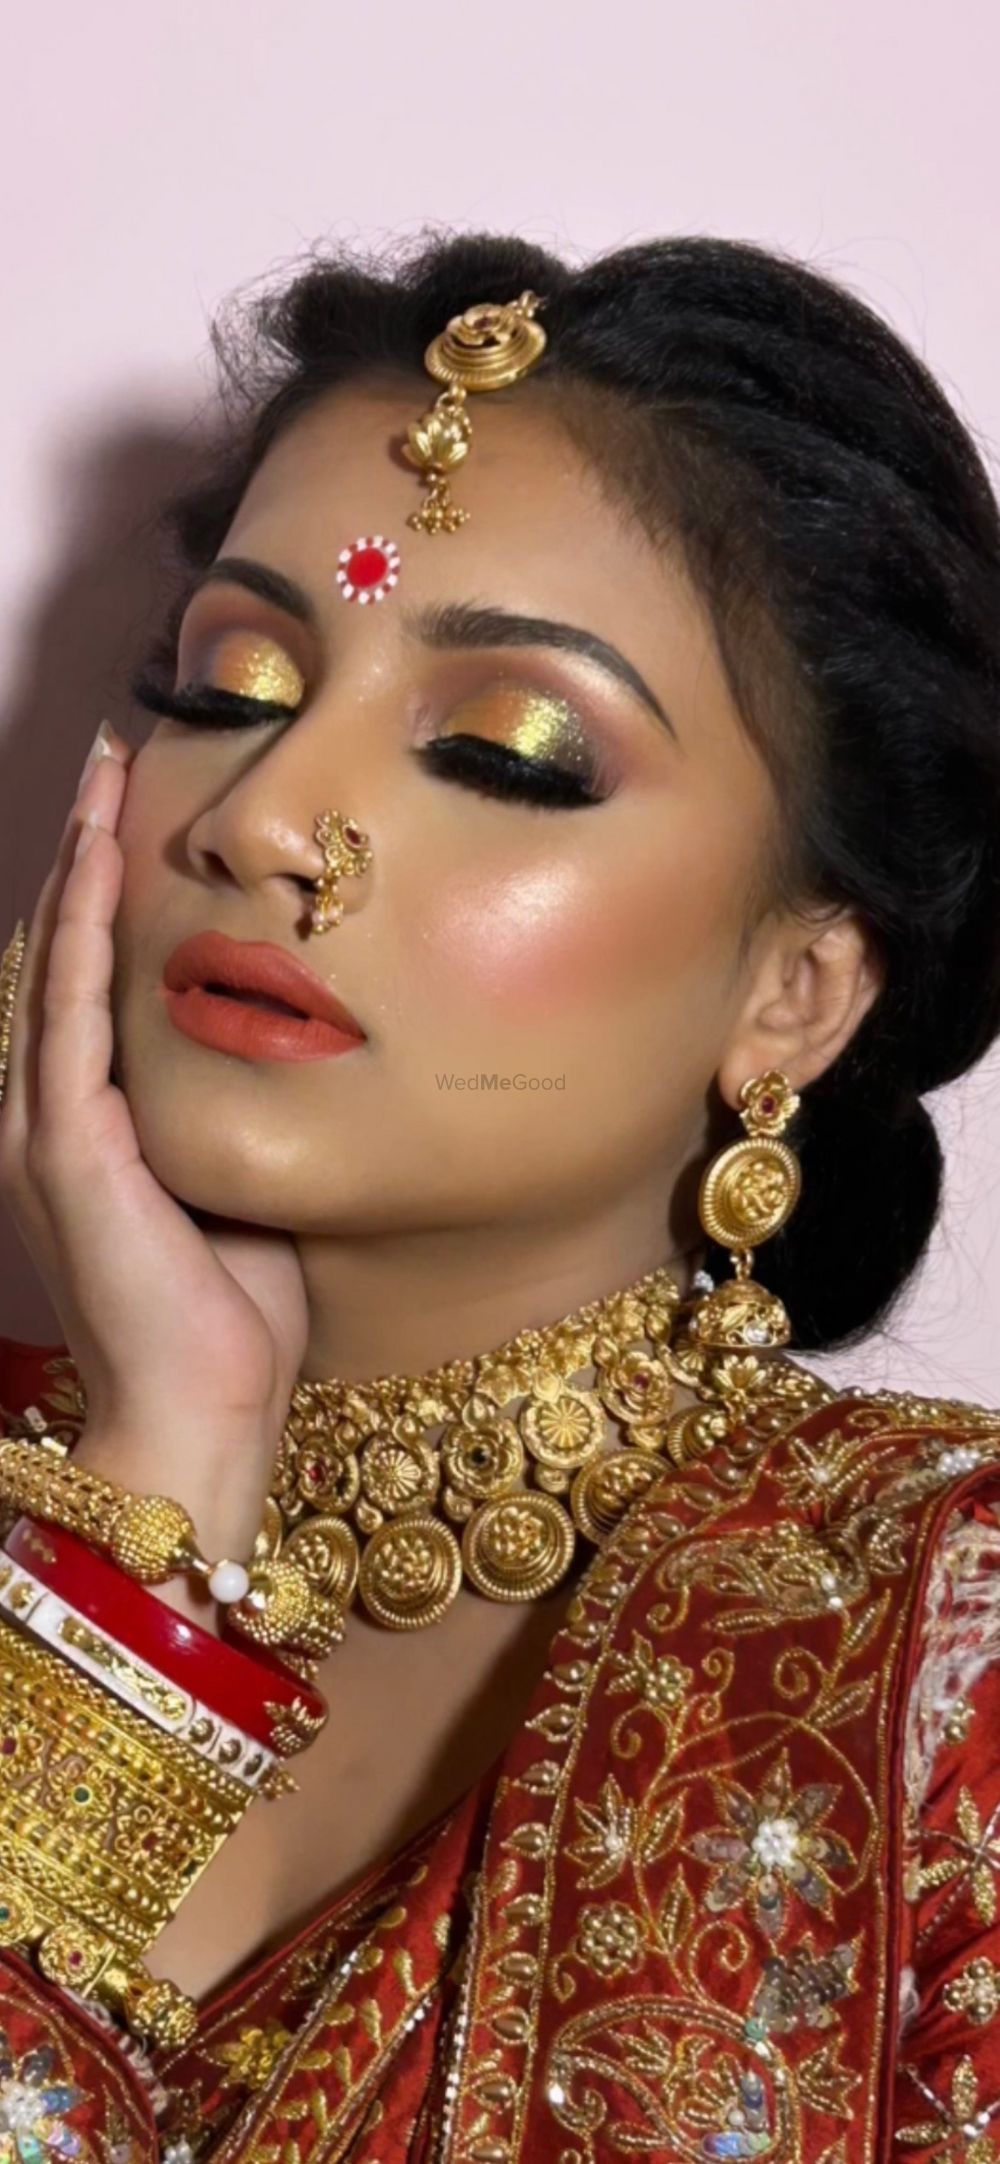 Photo From Bengali Bride - By Rashmi Gupta Mua